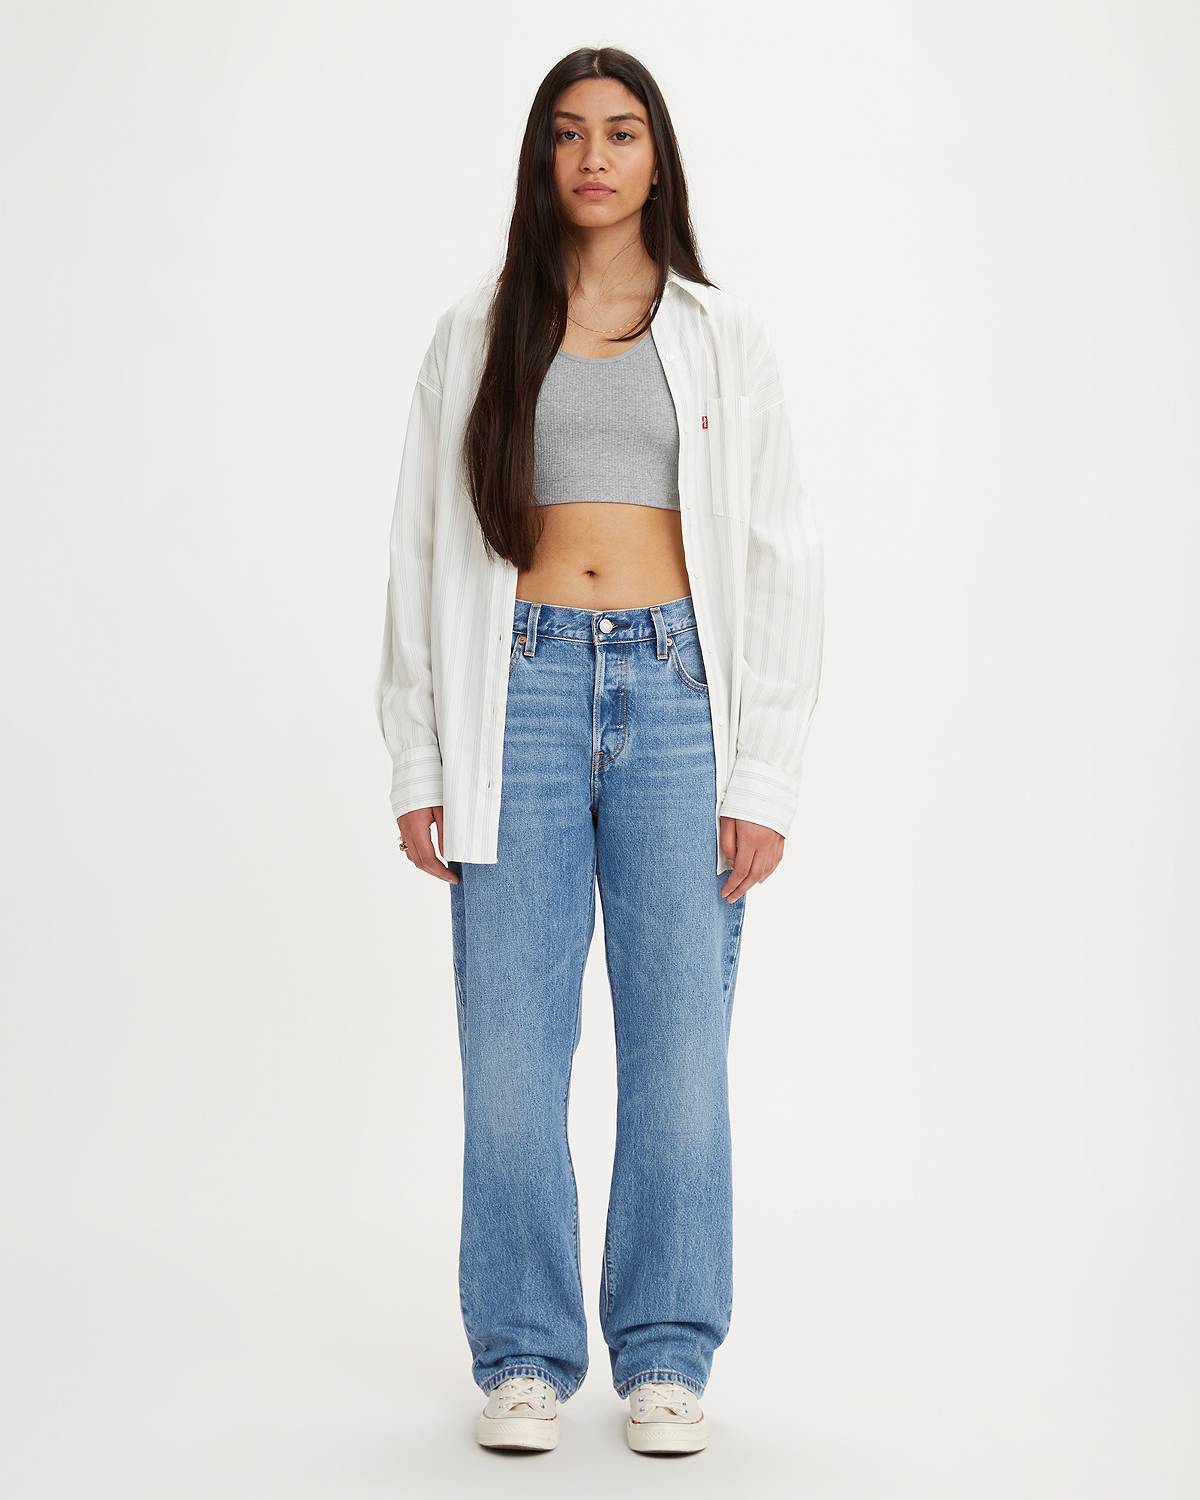 Model wearing medium-wash jeans.